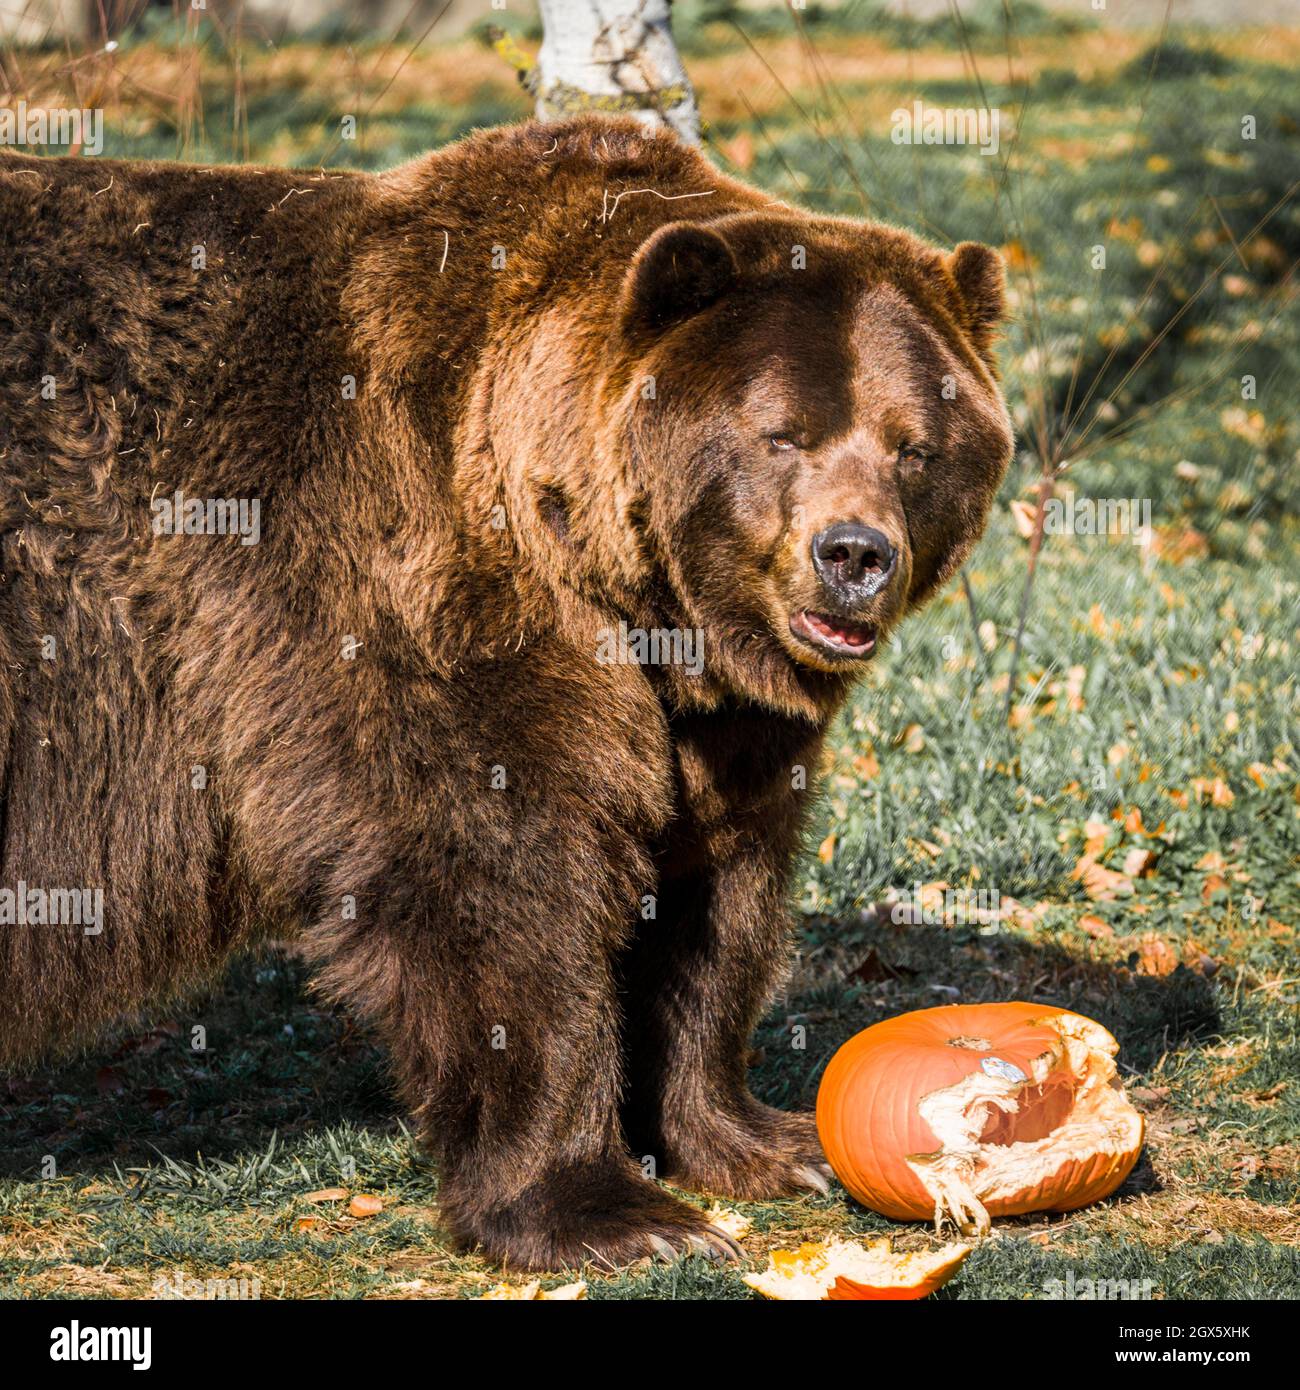 A brown bear in captivity Stock Photo